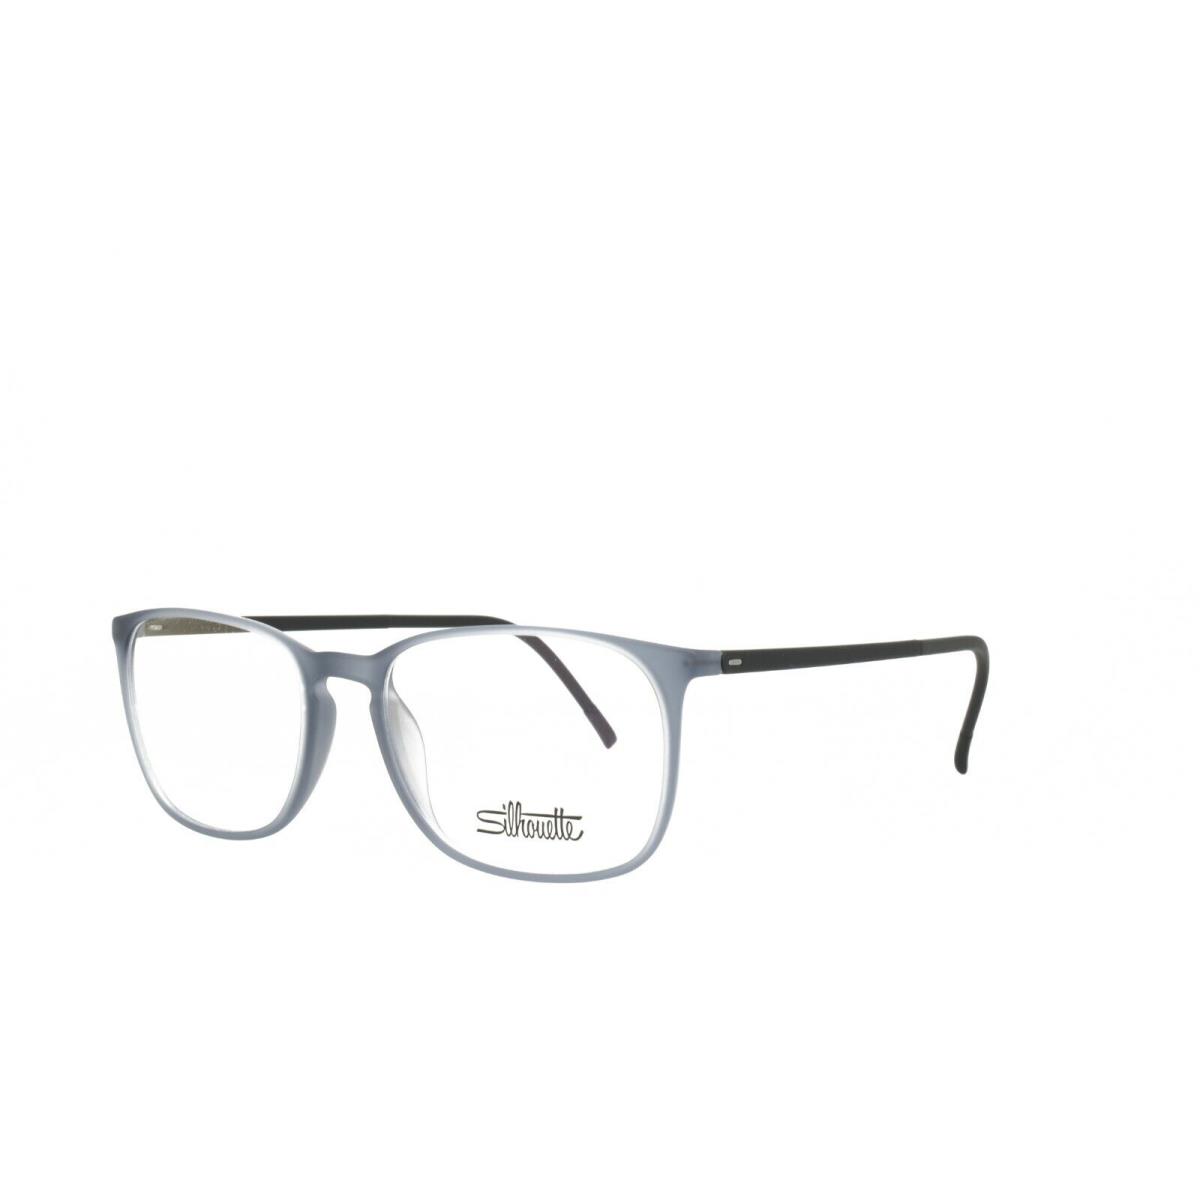 Silhouette Spx Illusion 2911 75 6510 Eyeglasses 53-17-140 Blue-grey ...